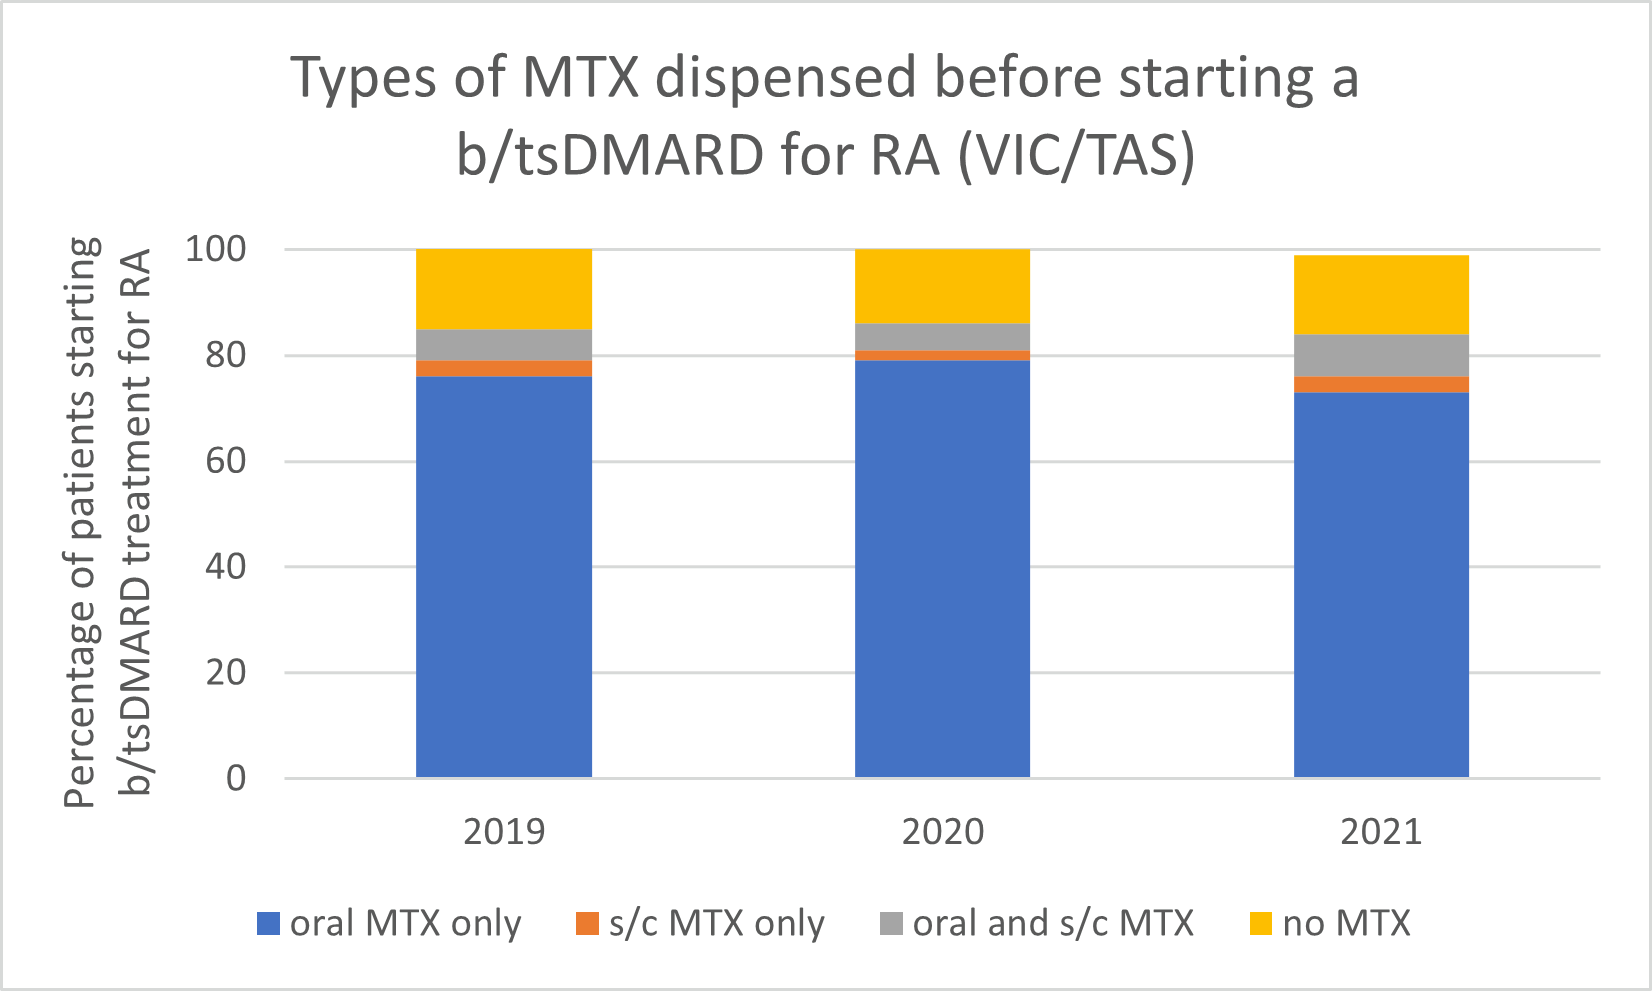 Types of methotrexate used before starting a b/tsDMARD for RA, 2019–2021 (VIC/TAS)